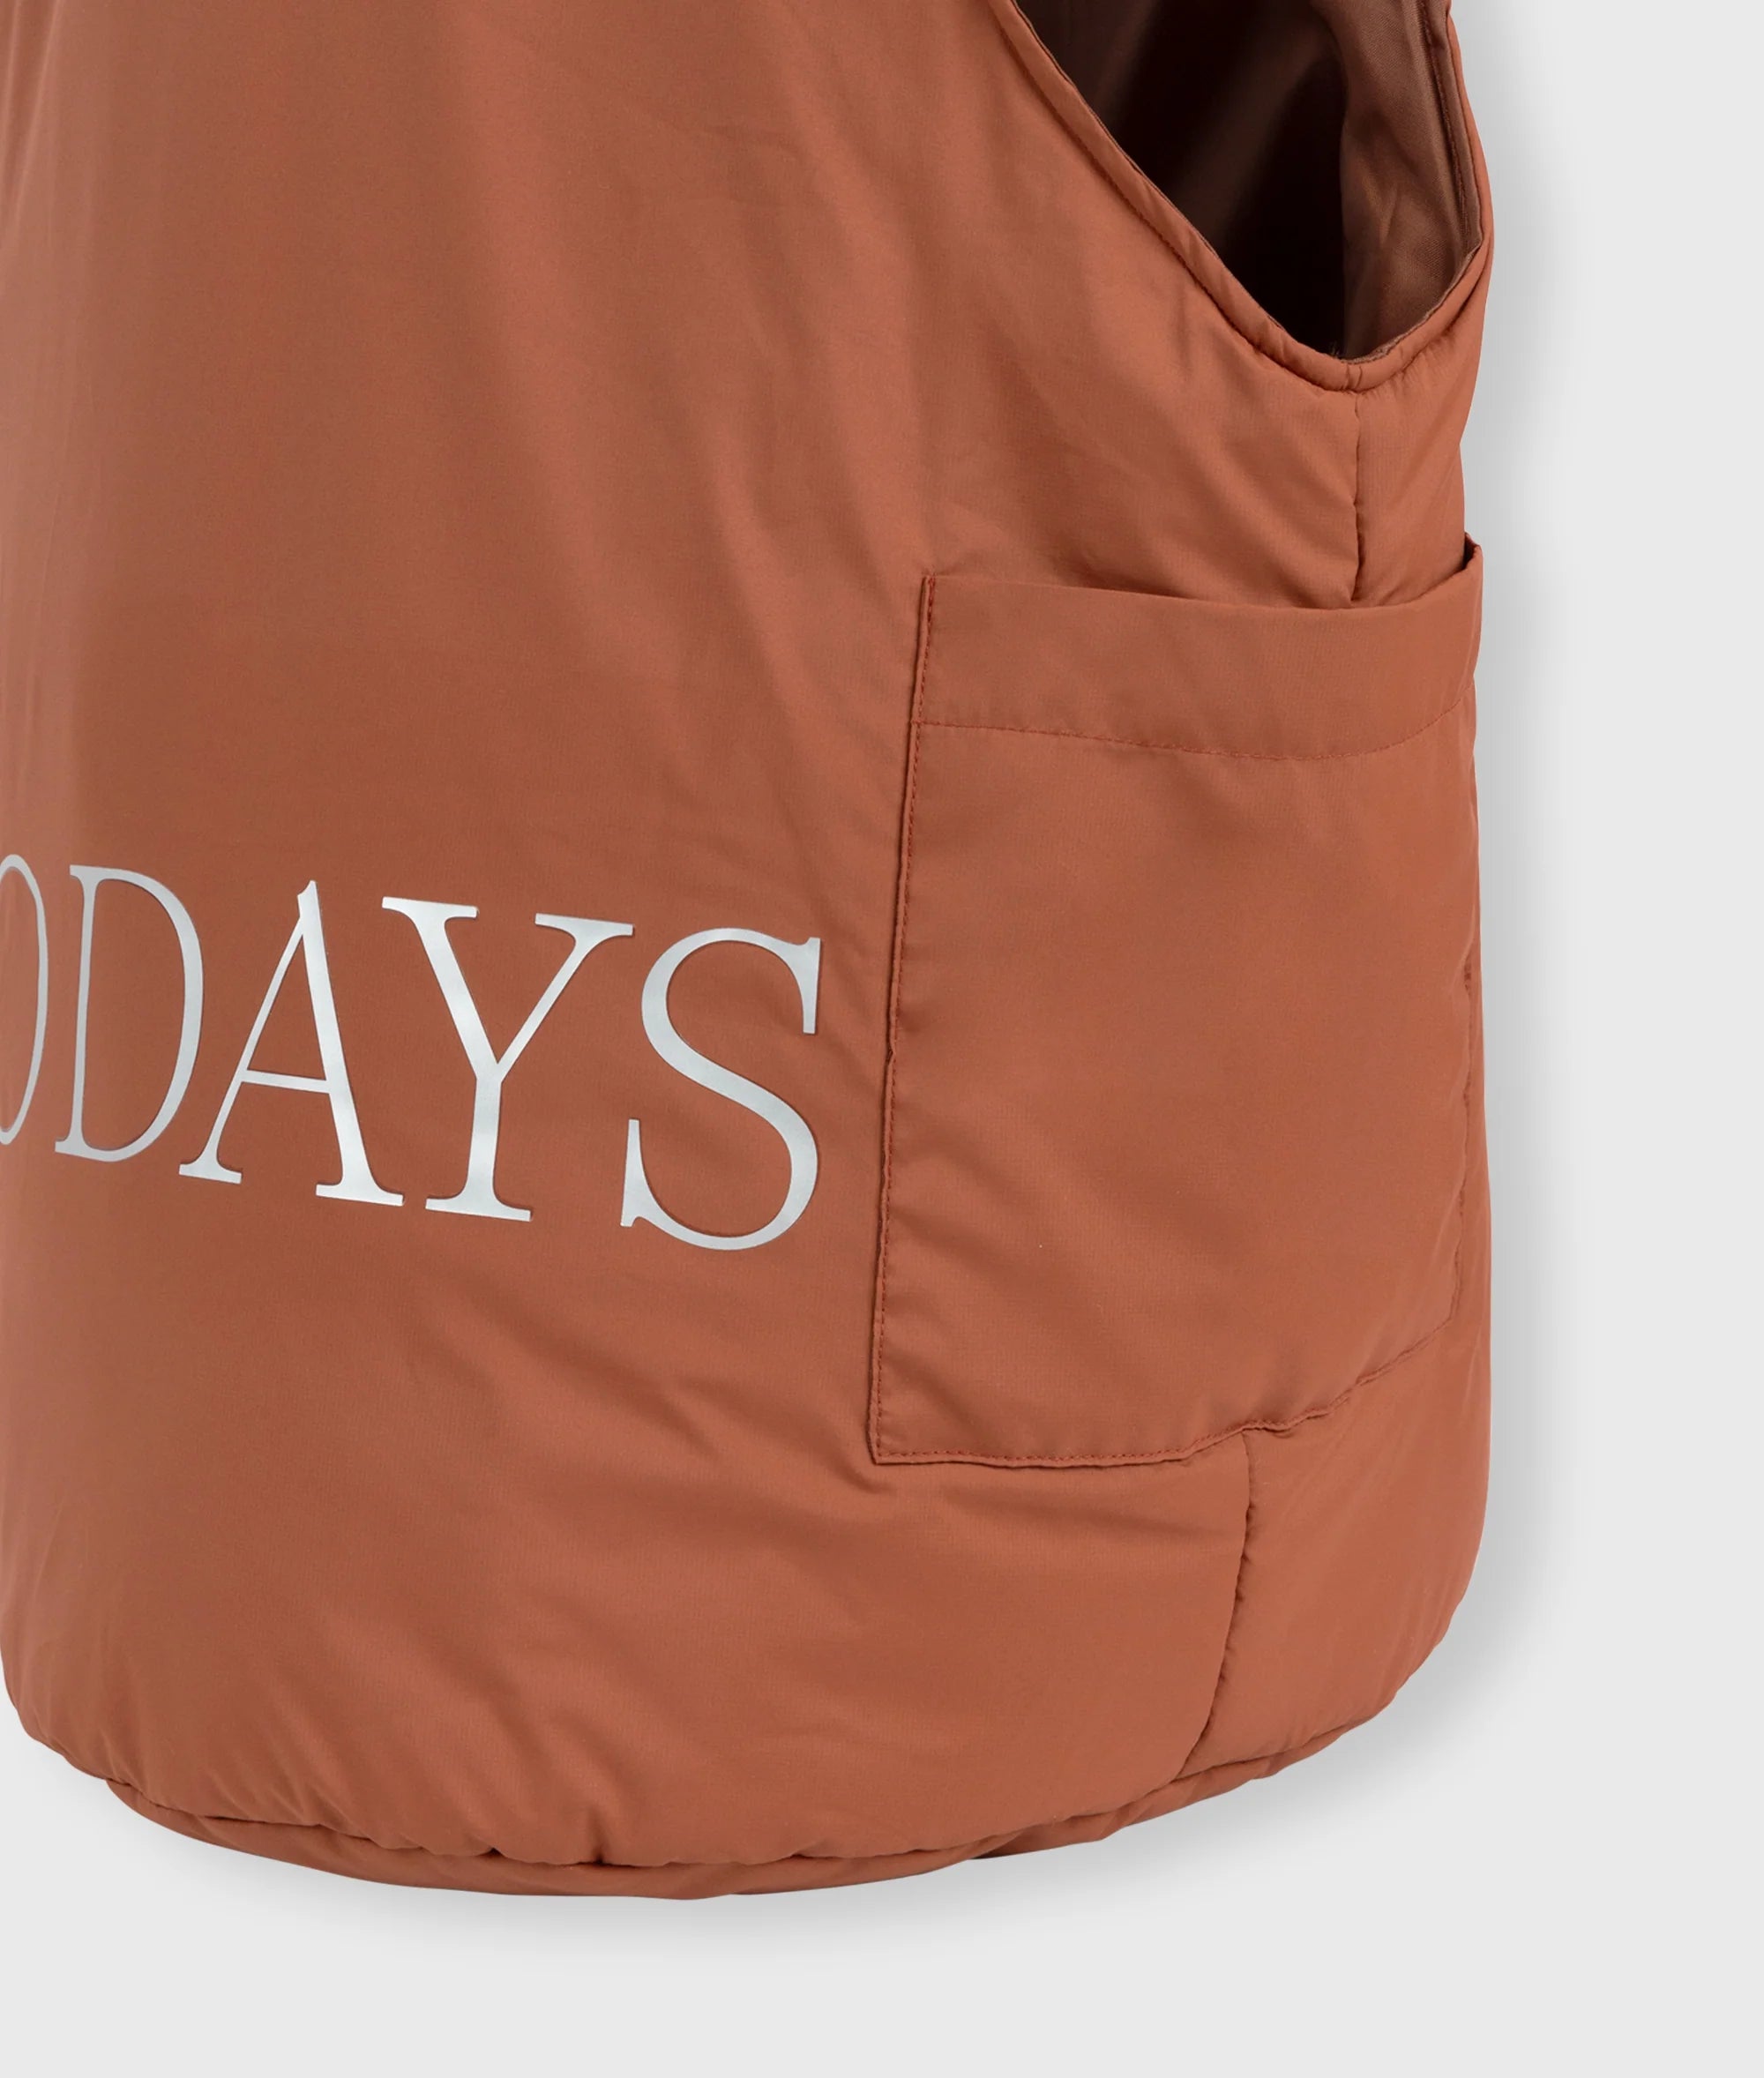 Soft cross body bag saddle brown - 10 days